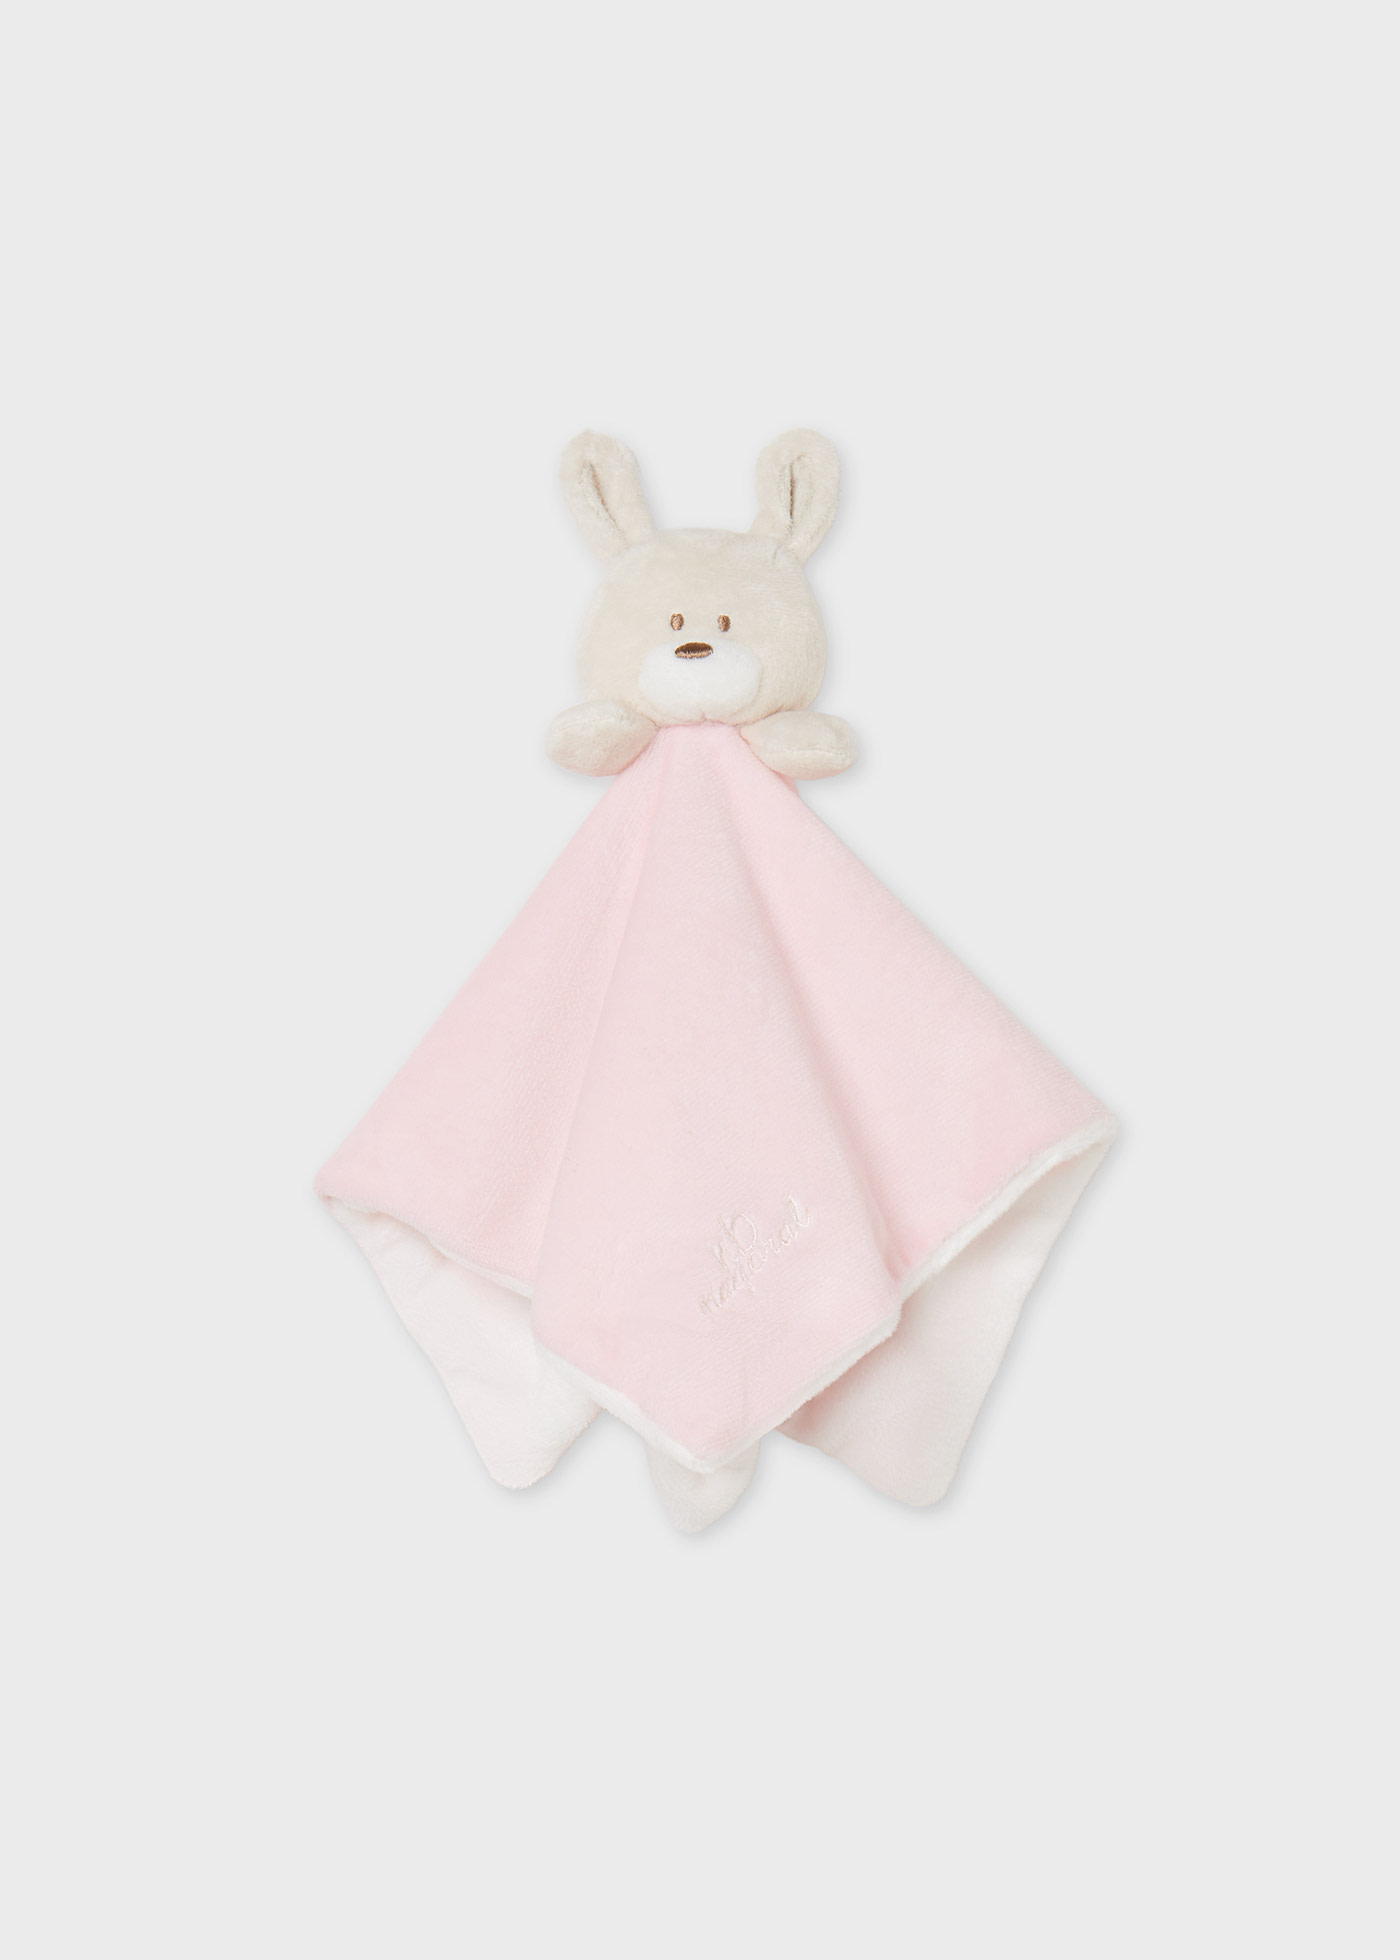 Teddy bear toy comforter